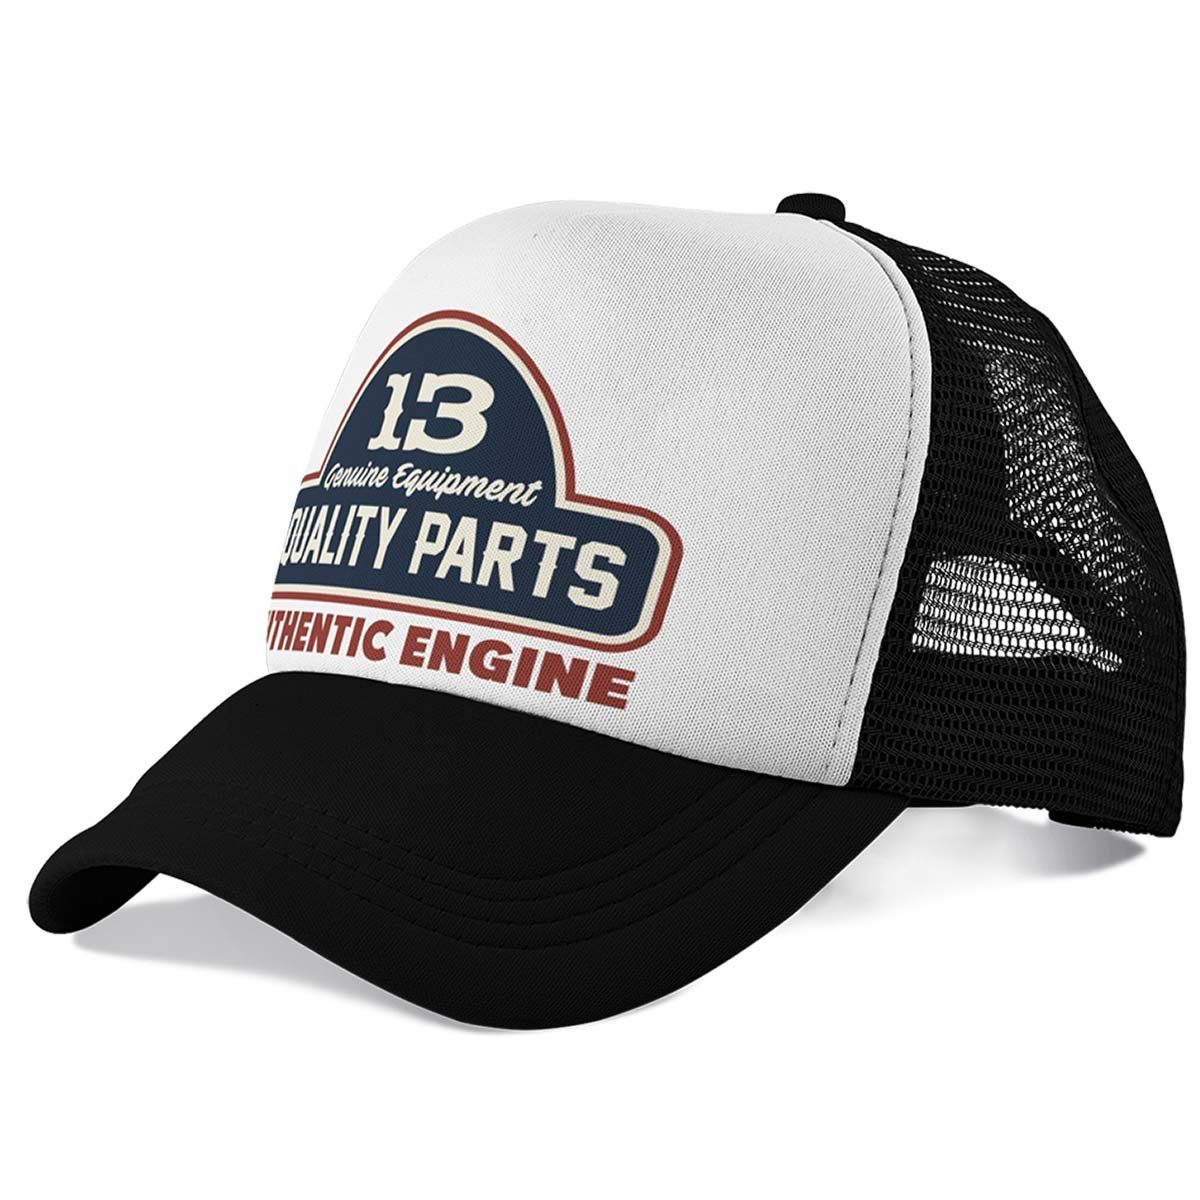 Parts On Baseball Wheels Visor Trucker Curved 13 Rebel Cap Cap Quality